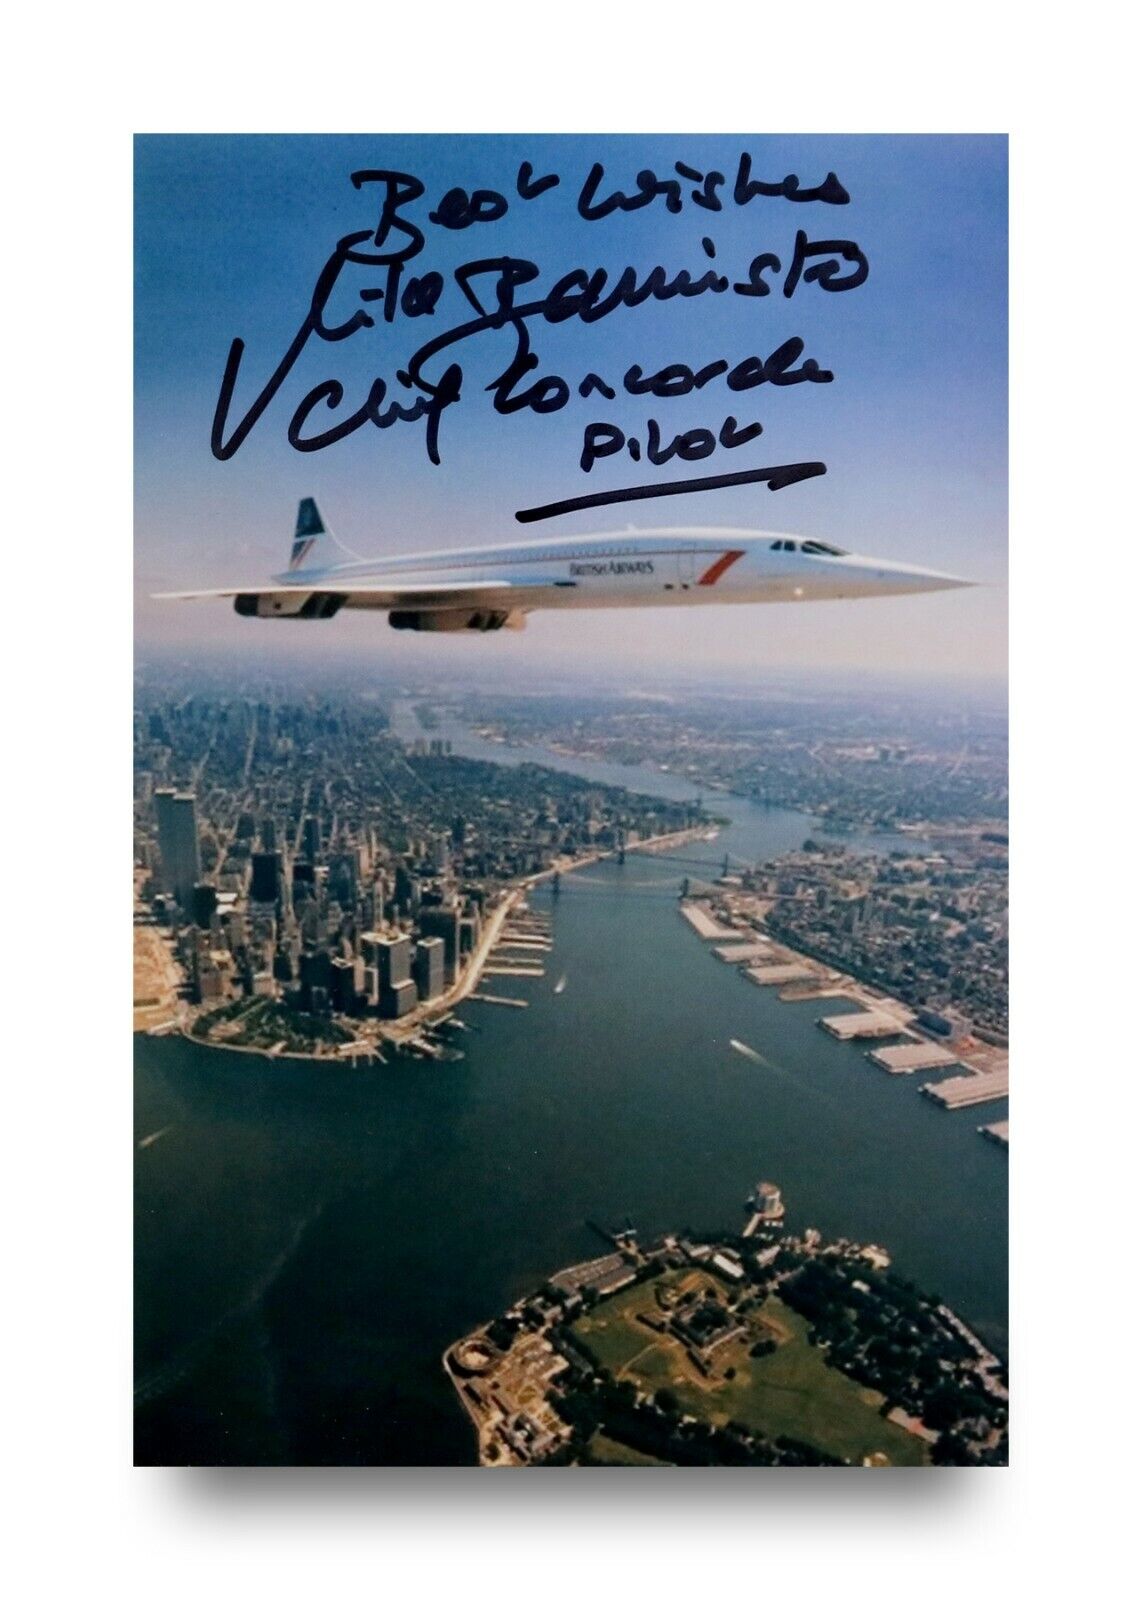 Mike Bannister Signed 6x4 Photo Poster painting Chief Concorde Pilot Autograph Memorabilia + COA